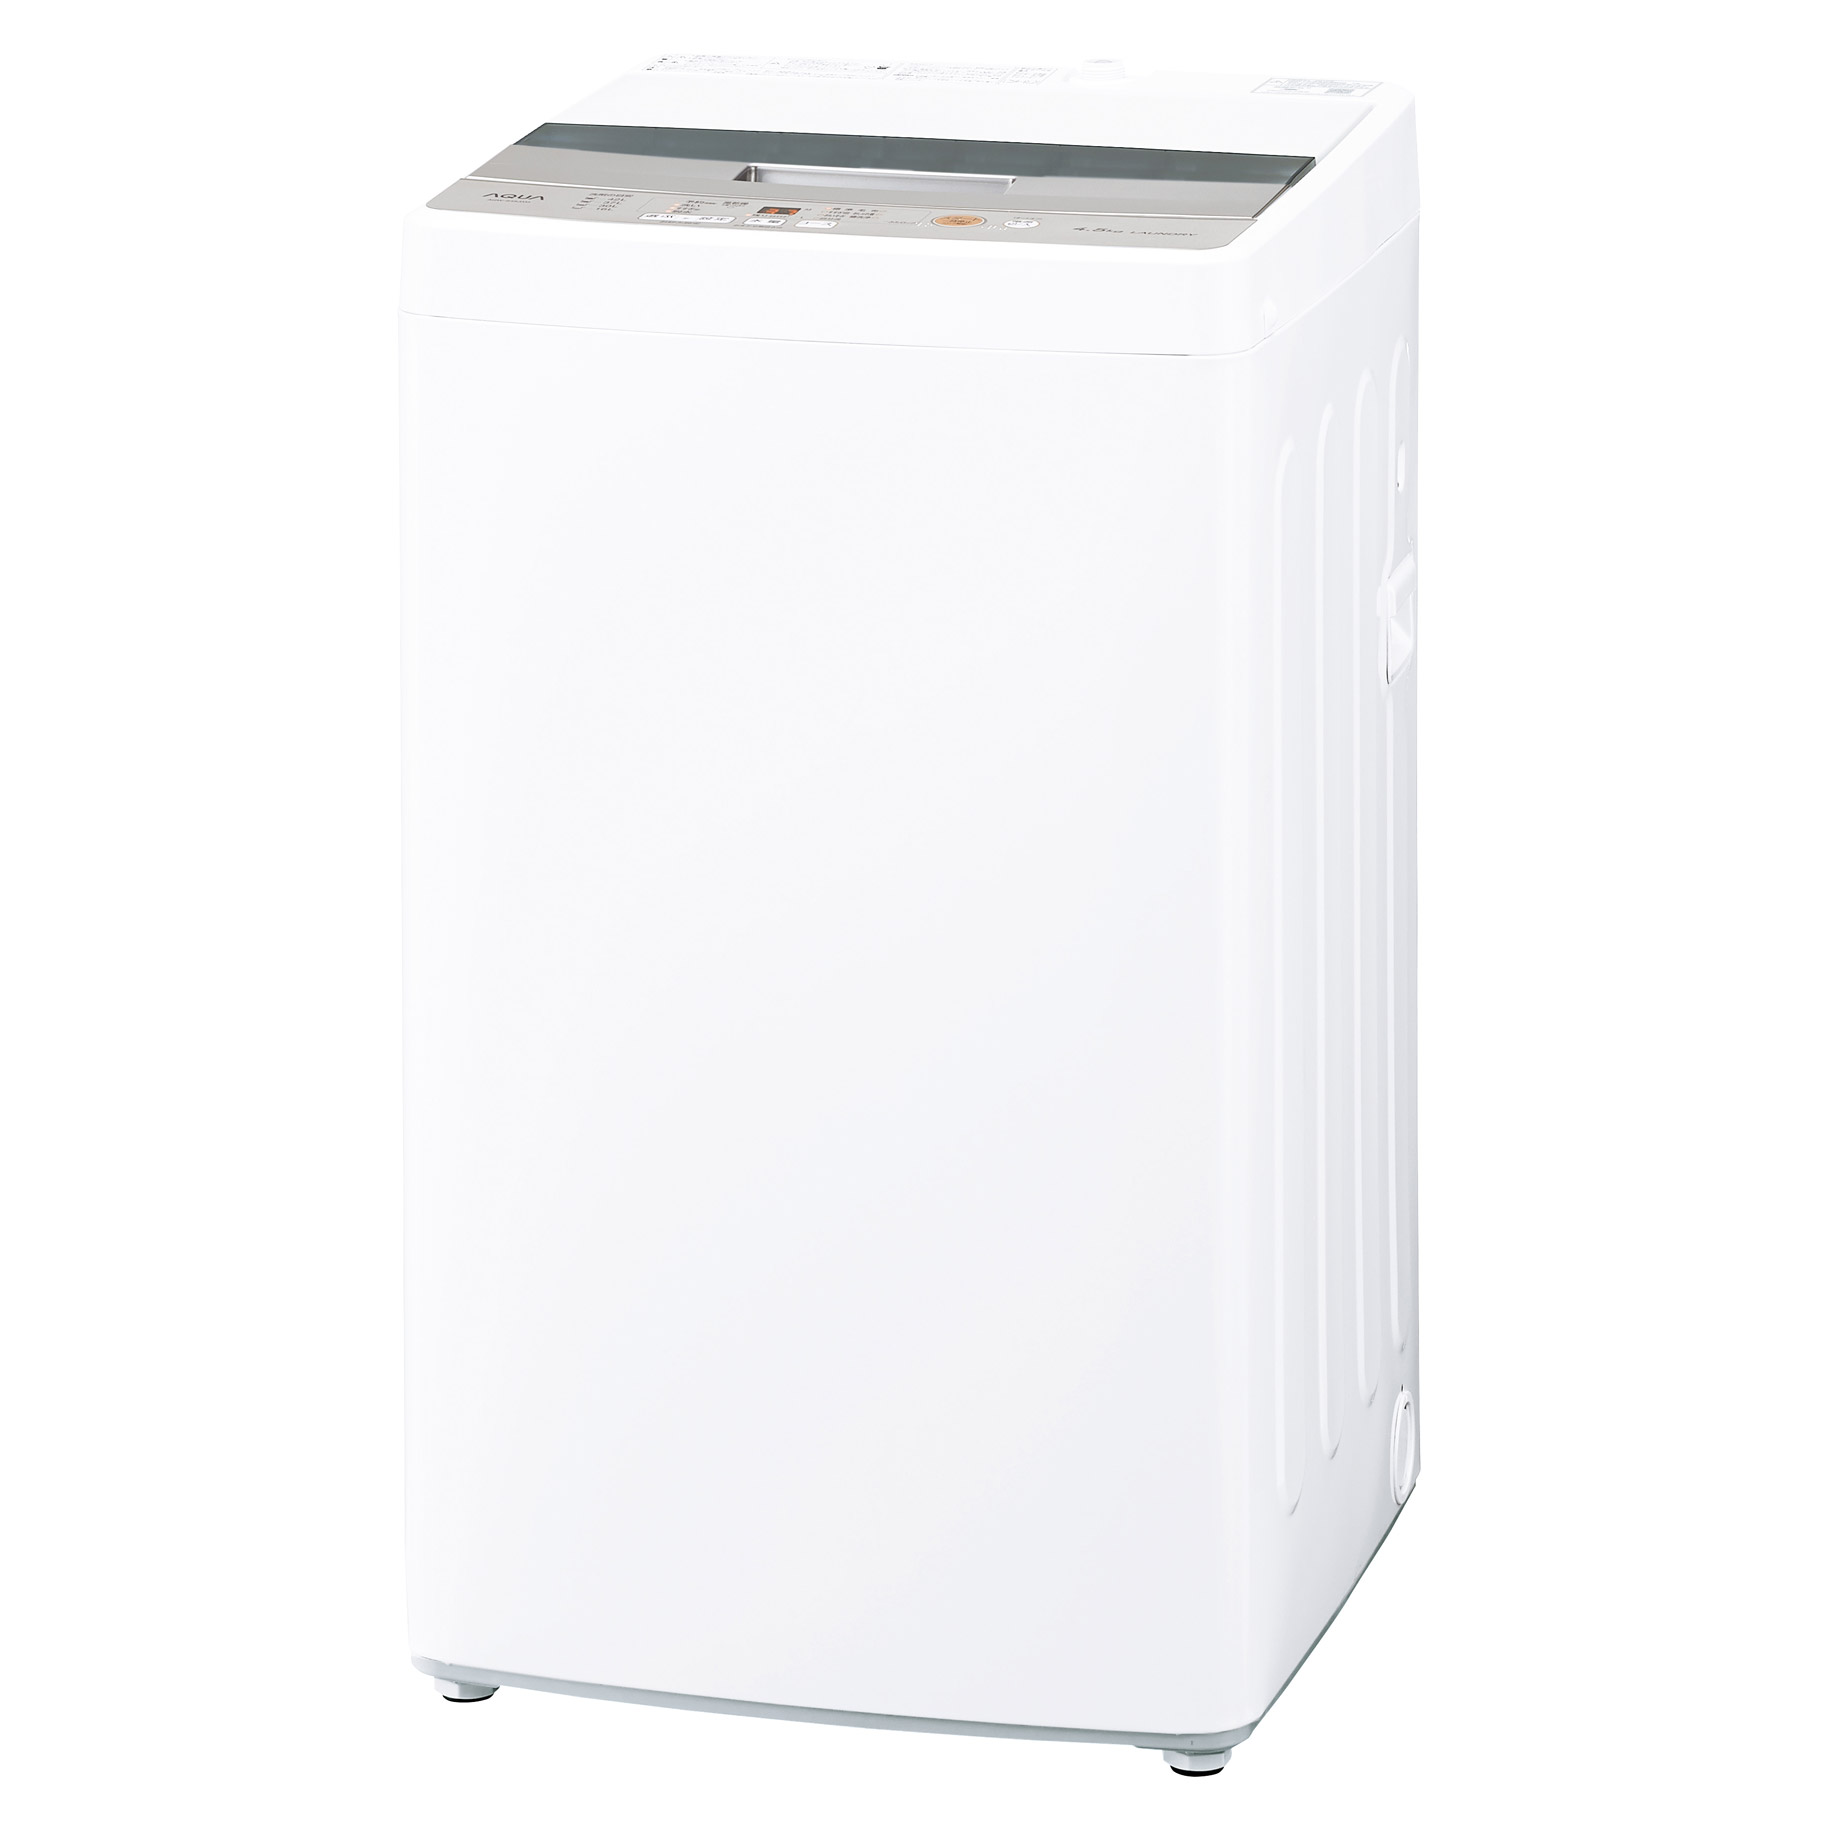 楽天市場】アクア AQUA 簡易乾燥機能付き洗濯機 AQW-S45J(W) | 価格 